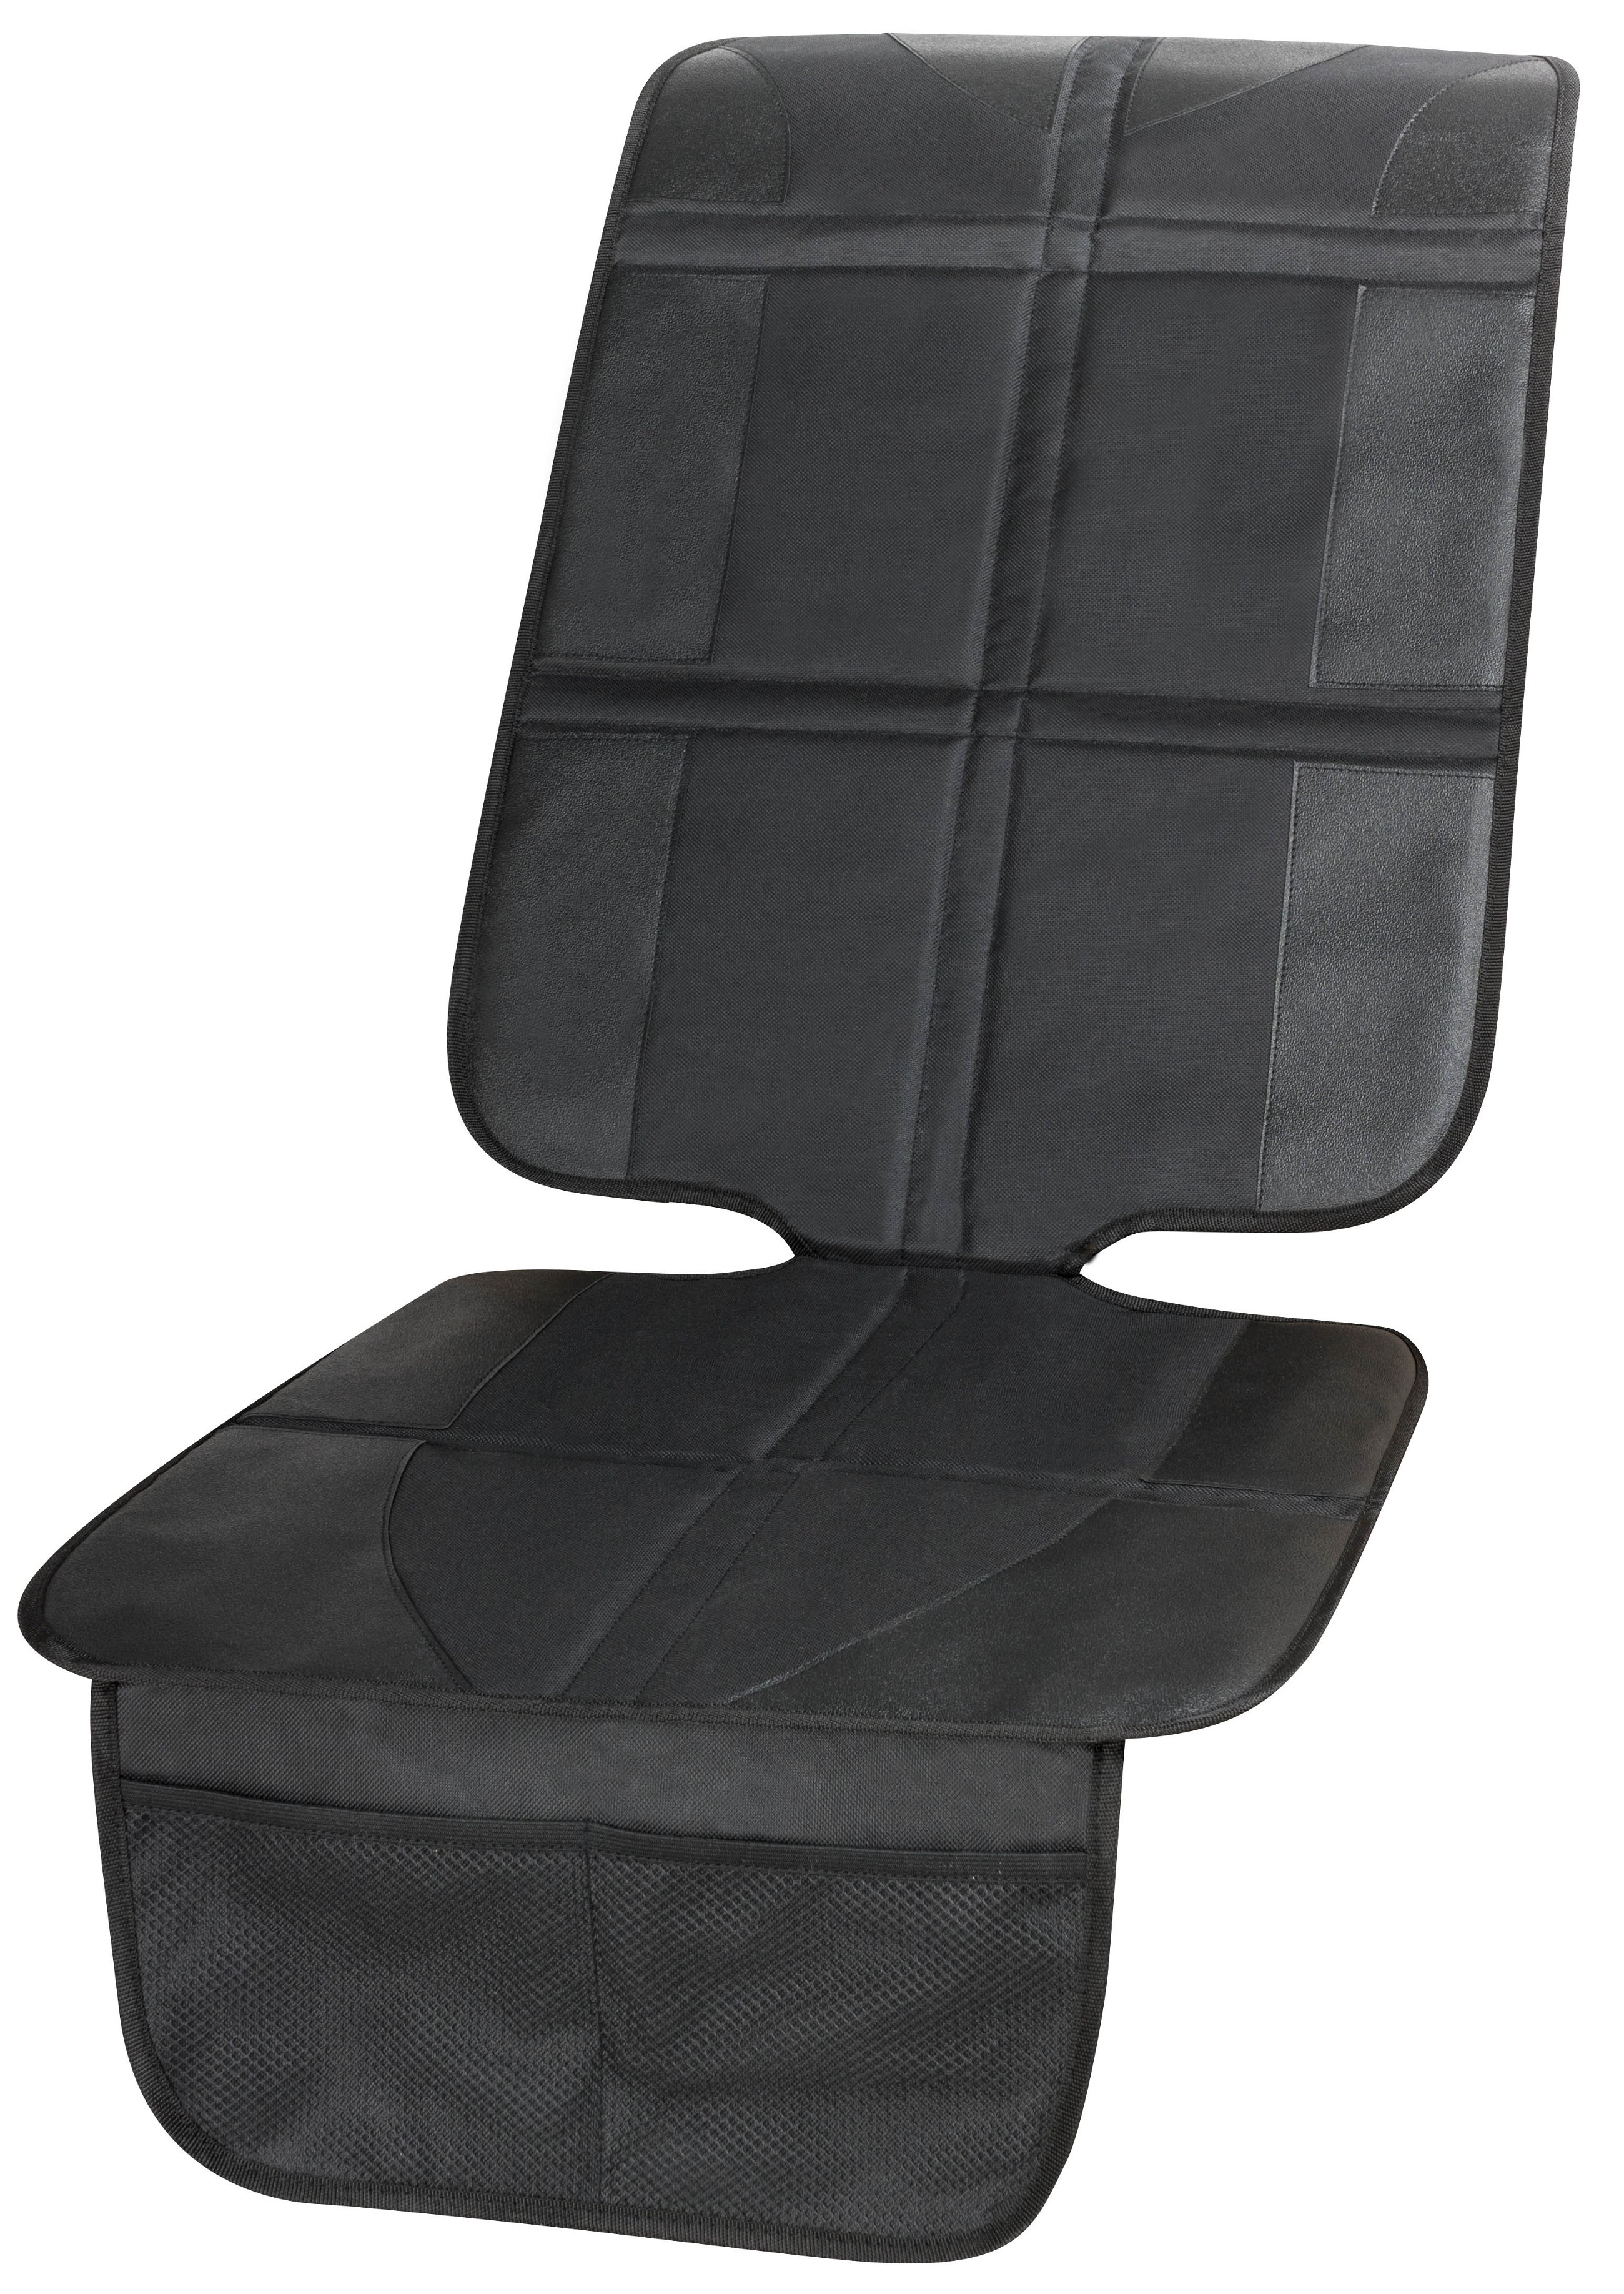 Child seat pad for car rear seat George XL Premium